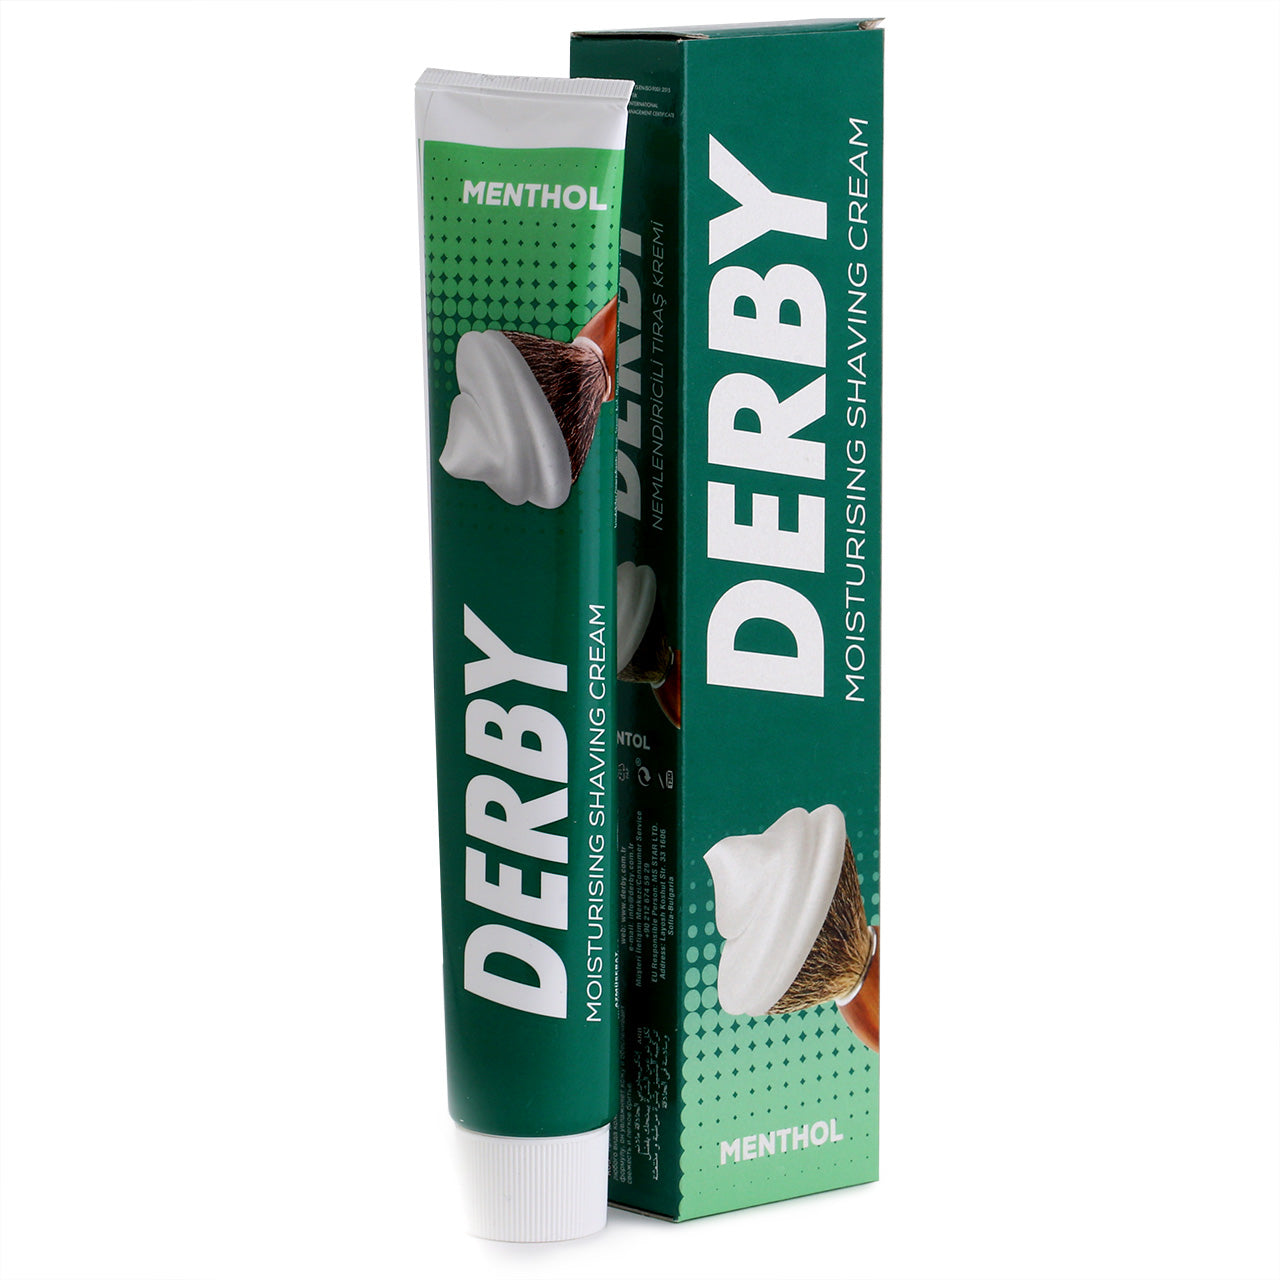 Derby Shaving Cream 100ml, Menthol